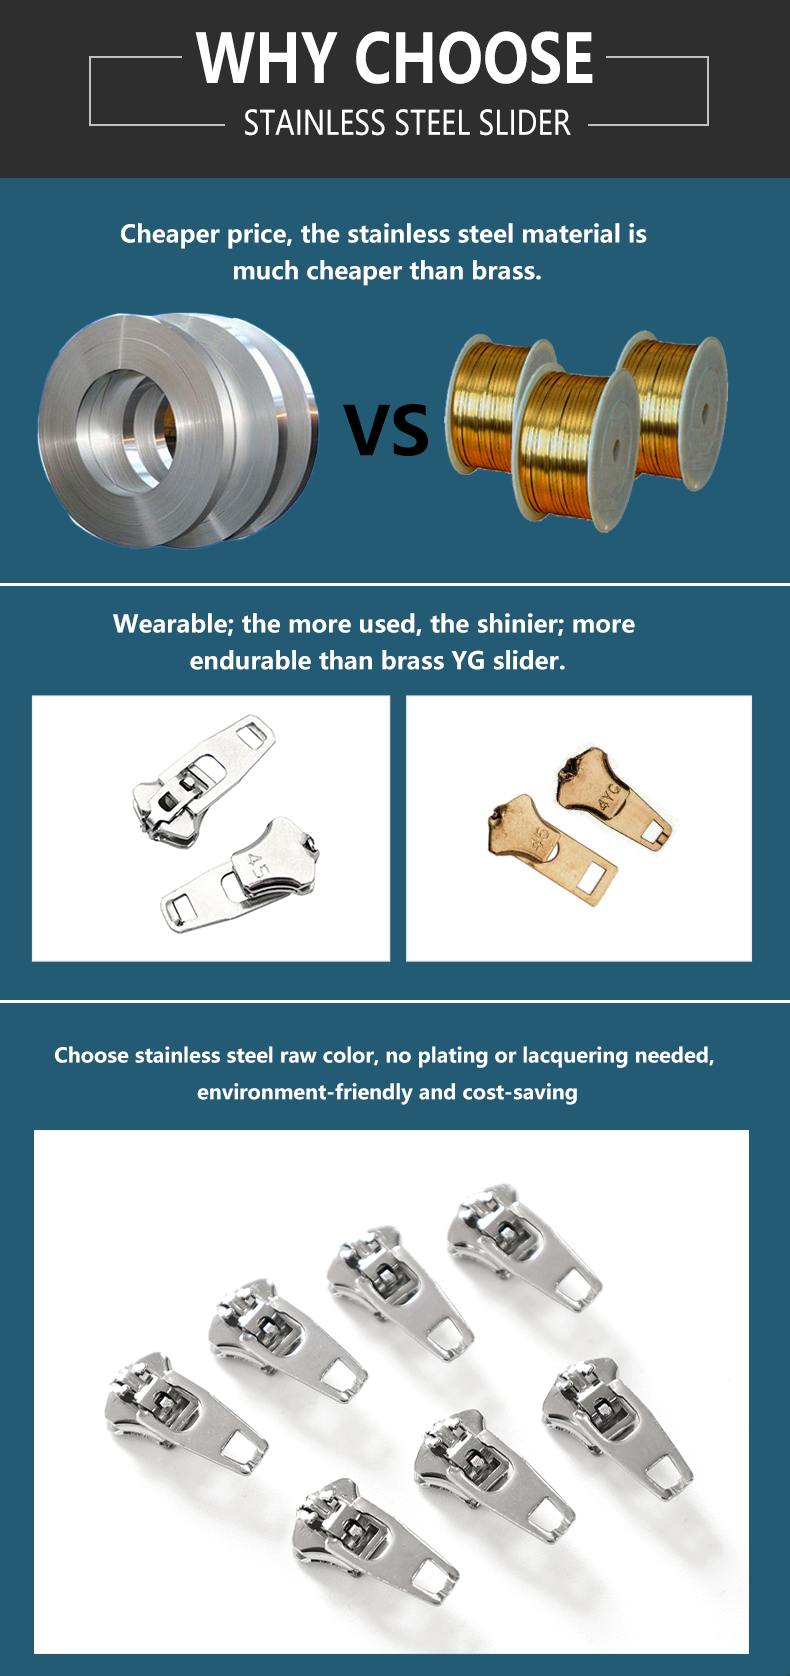 why choose Stainless steel YG SLDIER